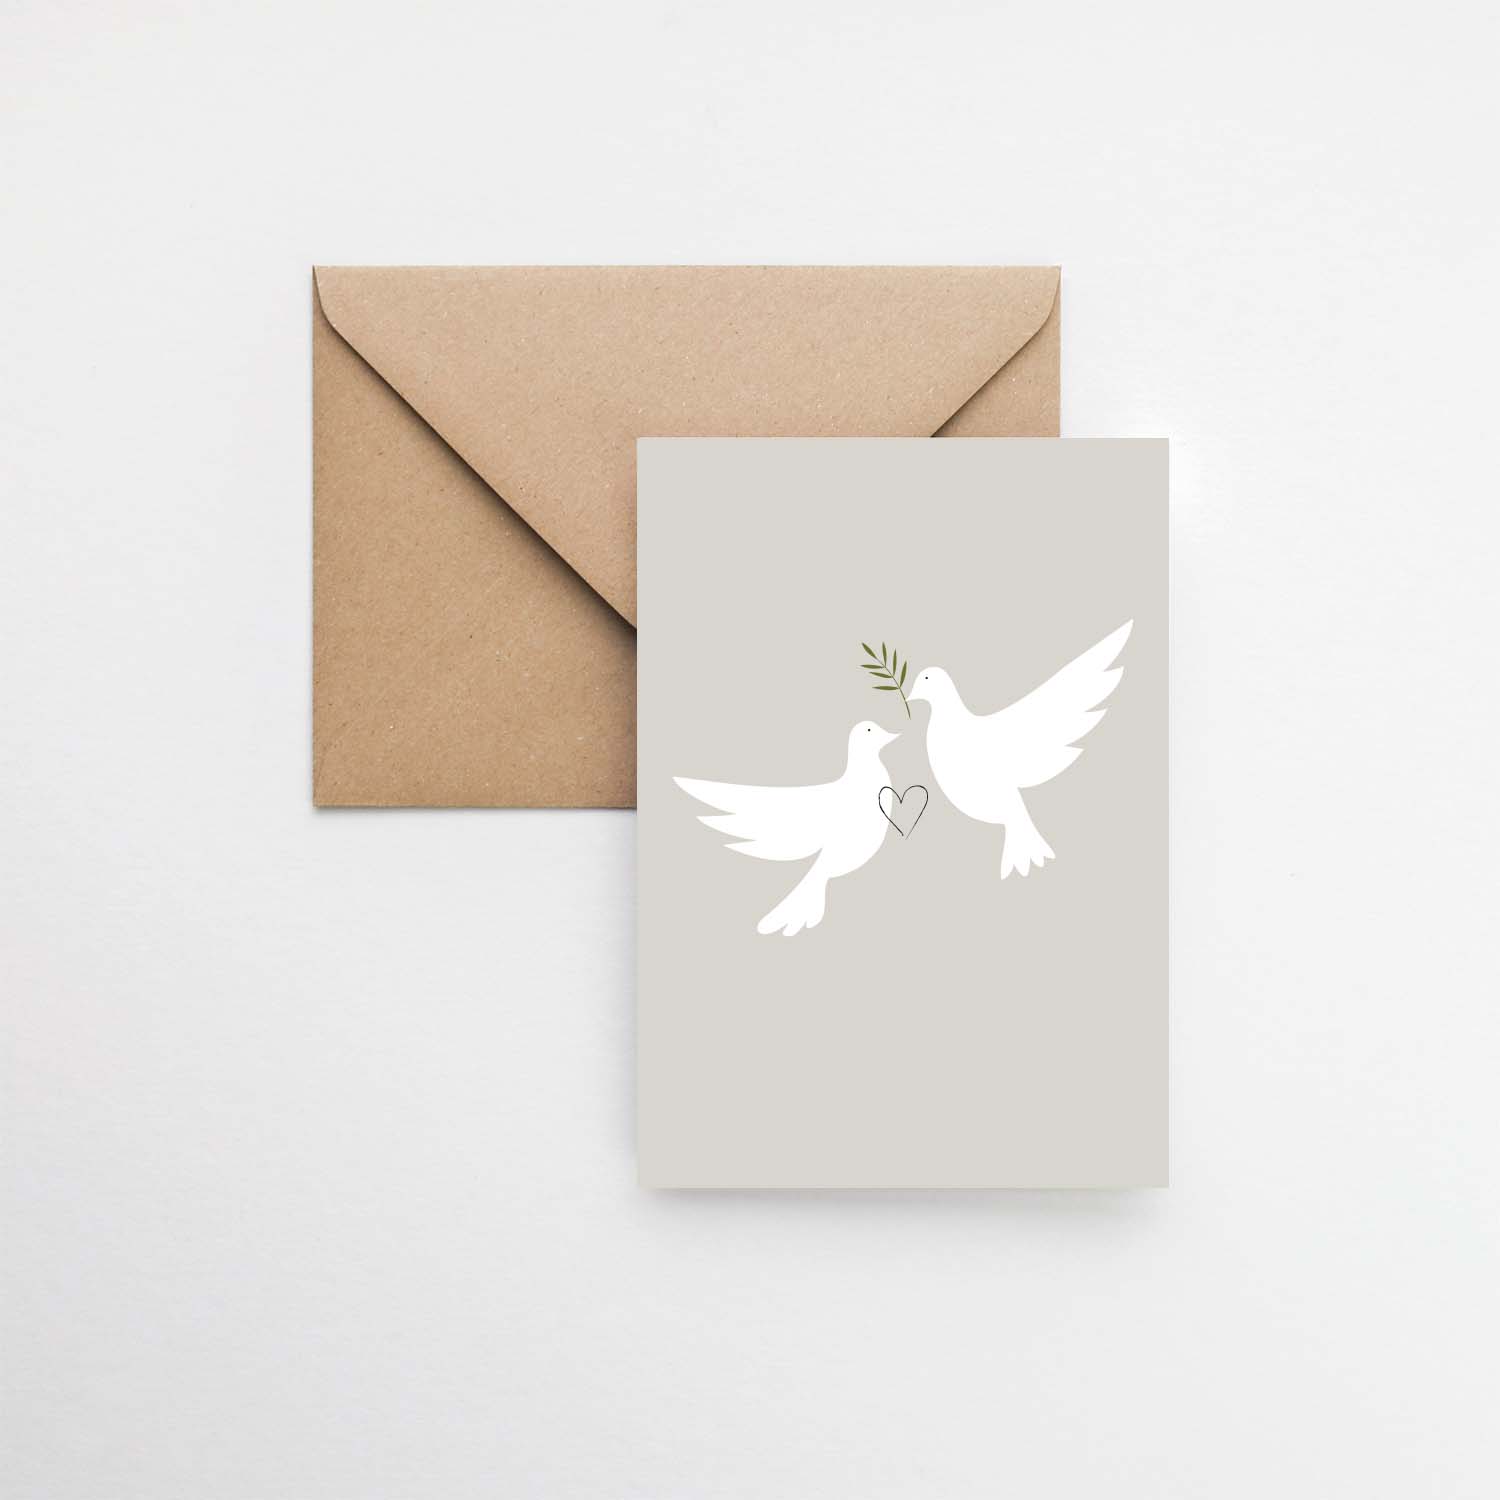 illustrated doves greeting card Elemente Design 